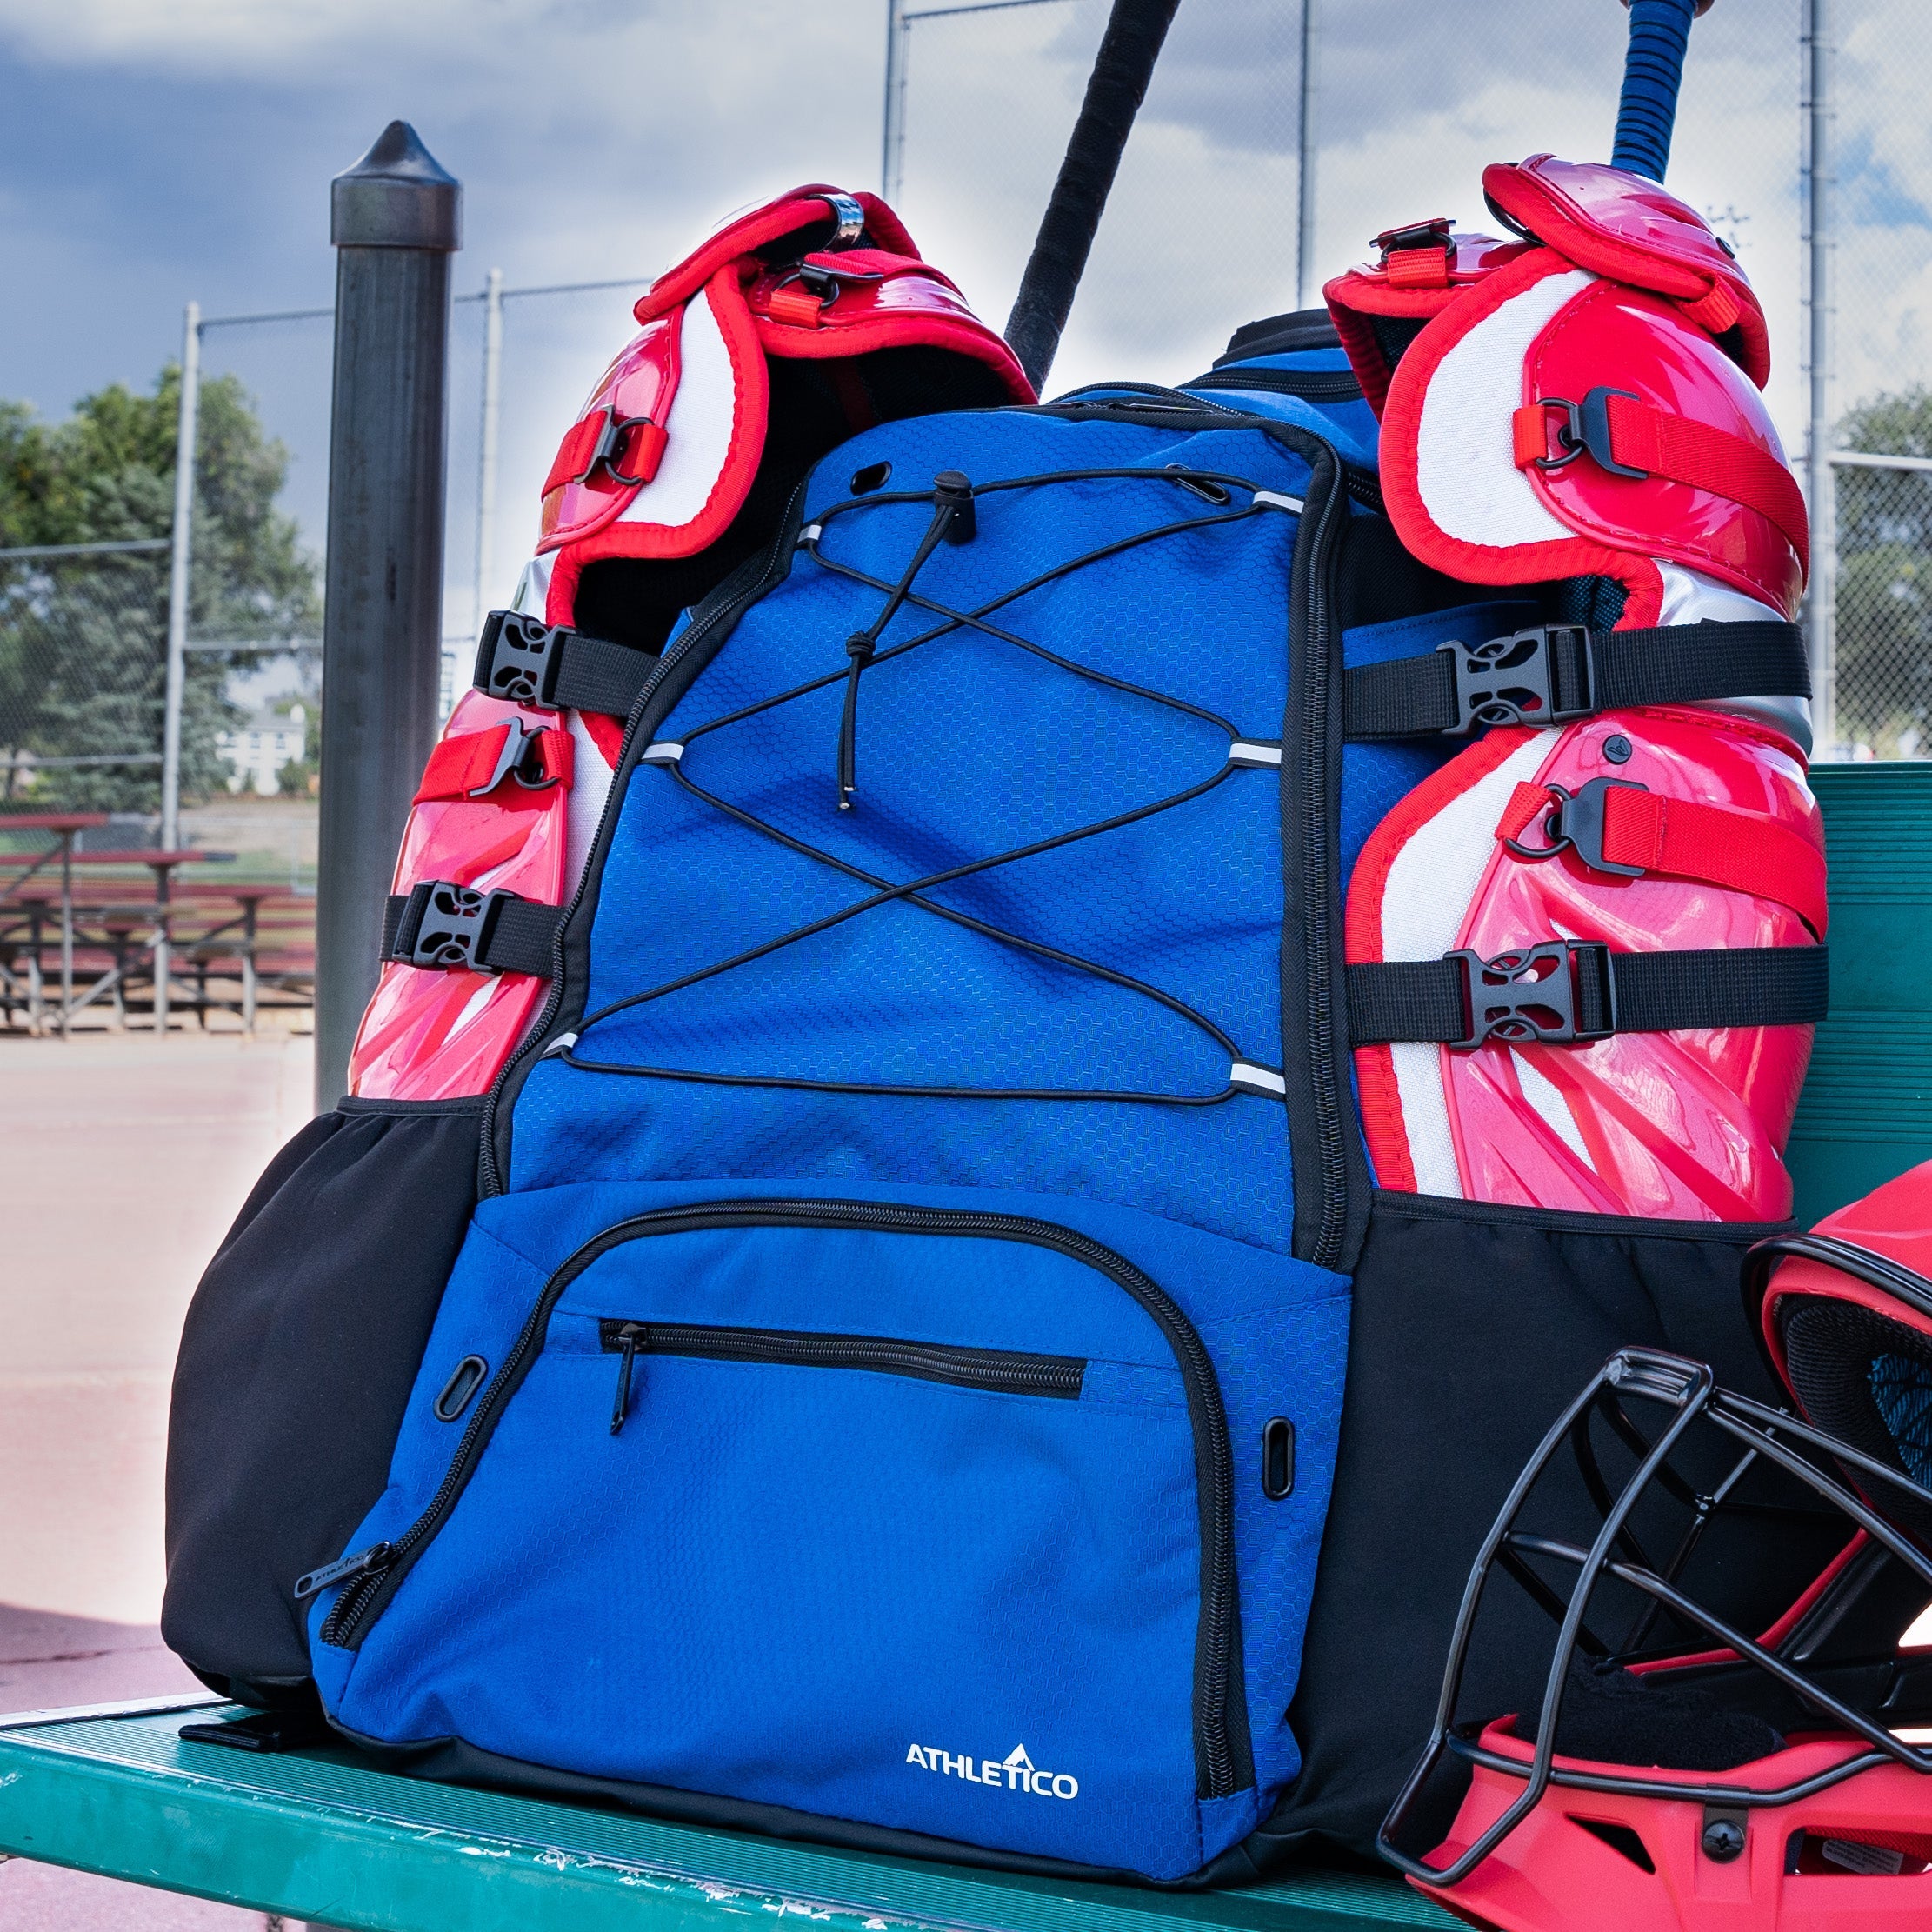 Athletico Baseball Bat Bag - Backpack for Baseball, T-Ball